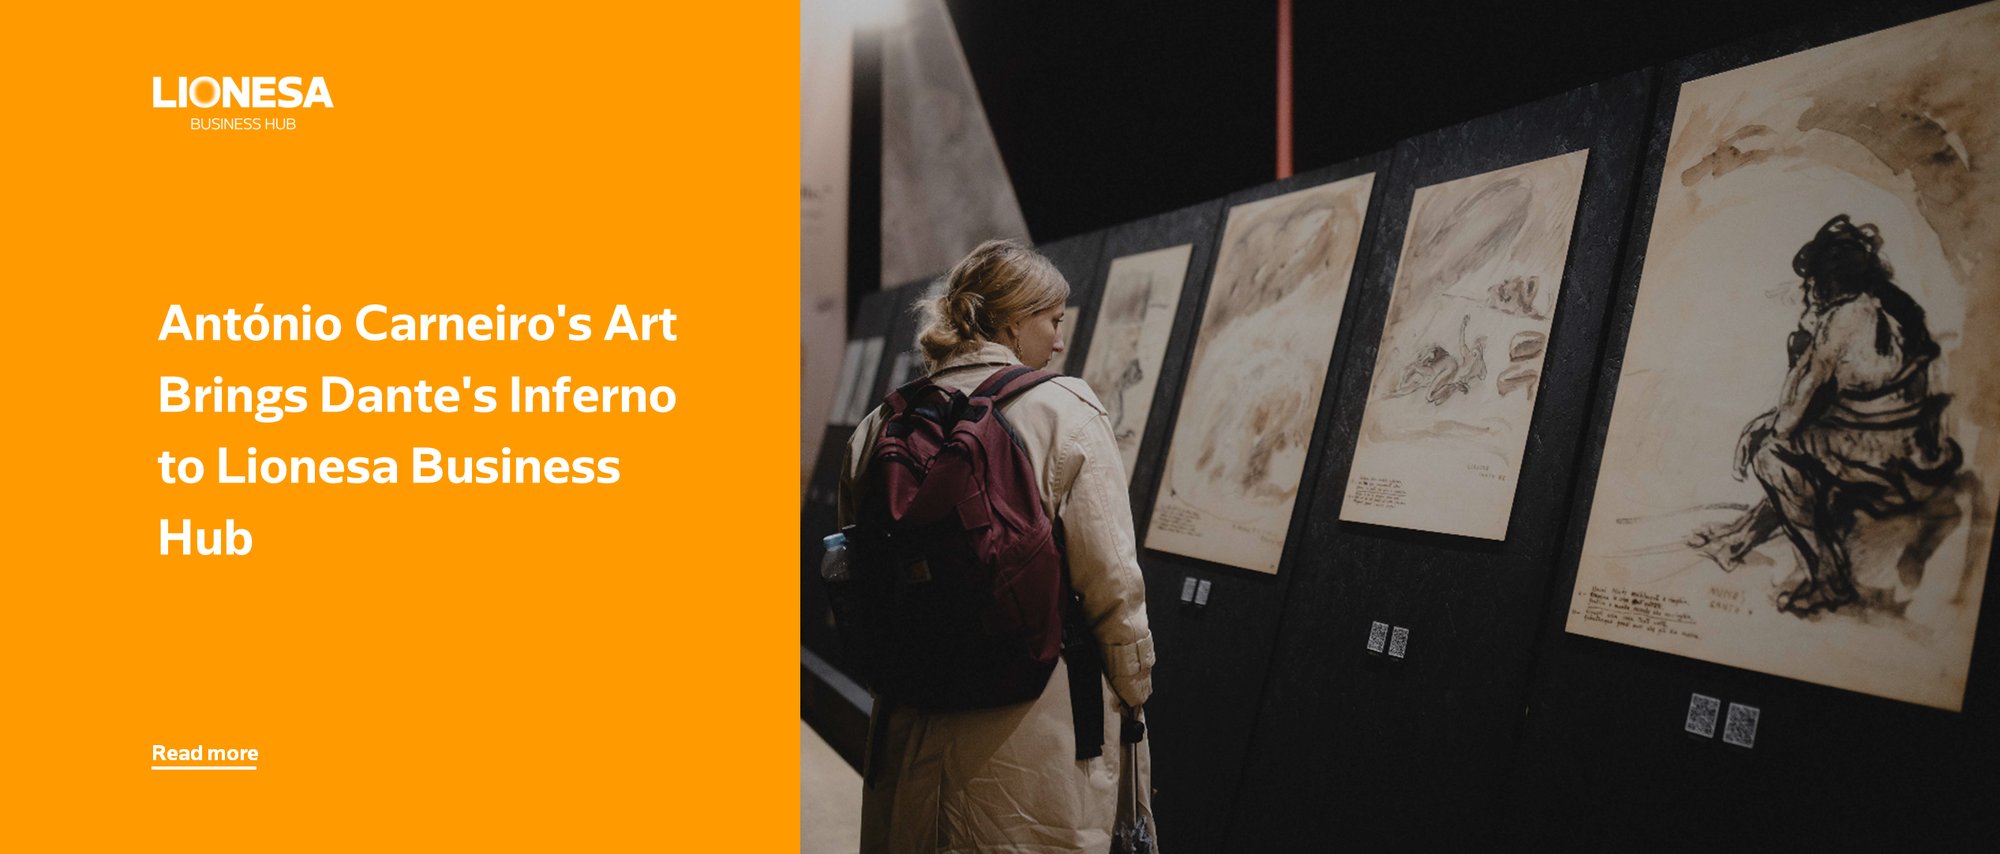 António Carneiro's Art Brings Dante's Inferno to Lionesa Business Hub